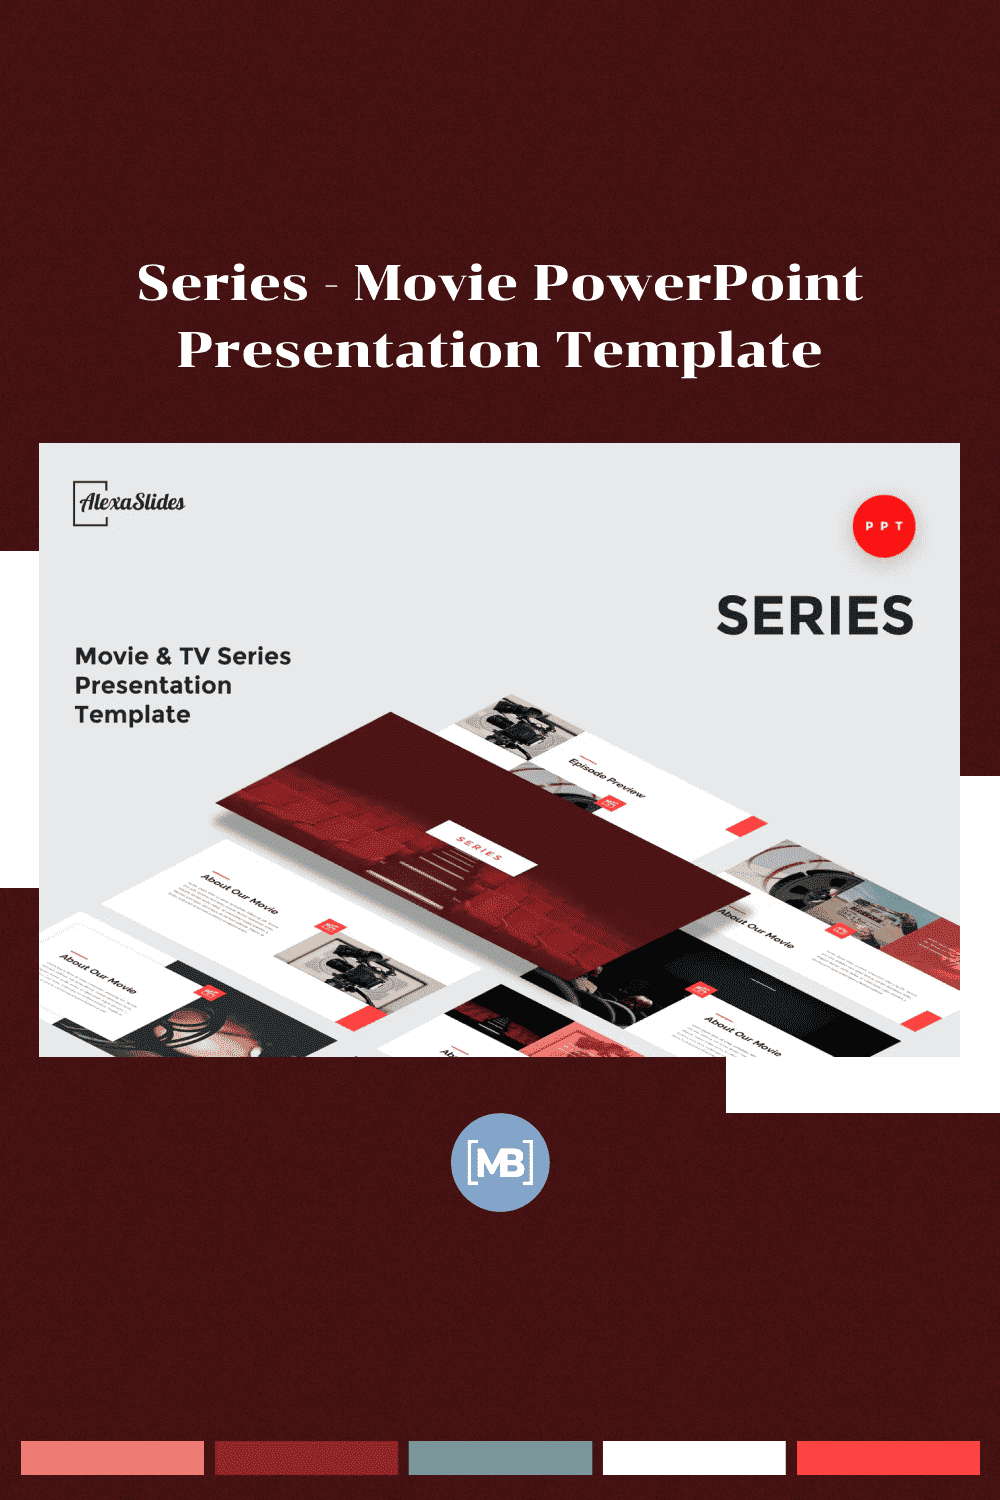 Series - movie powerpoint presentation template.